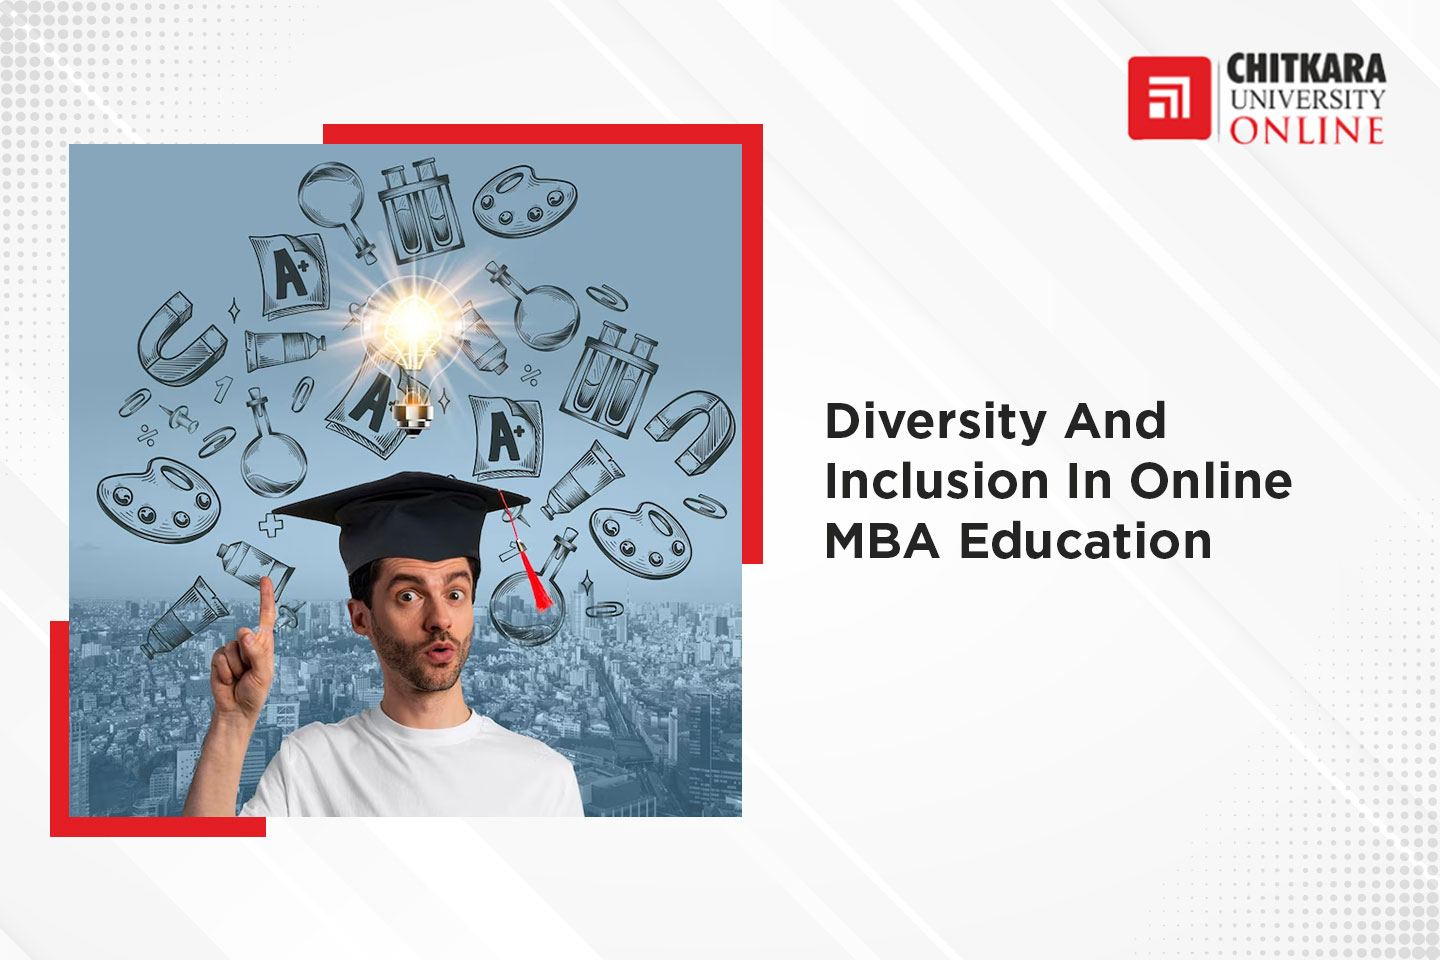 Online MBA Education-ChitkaraU Online